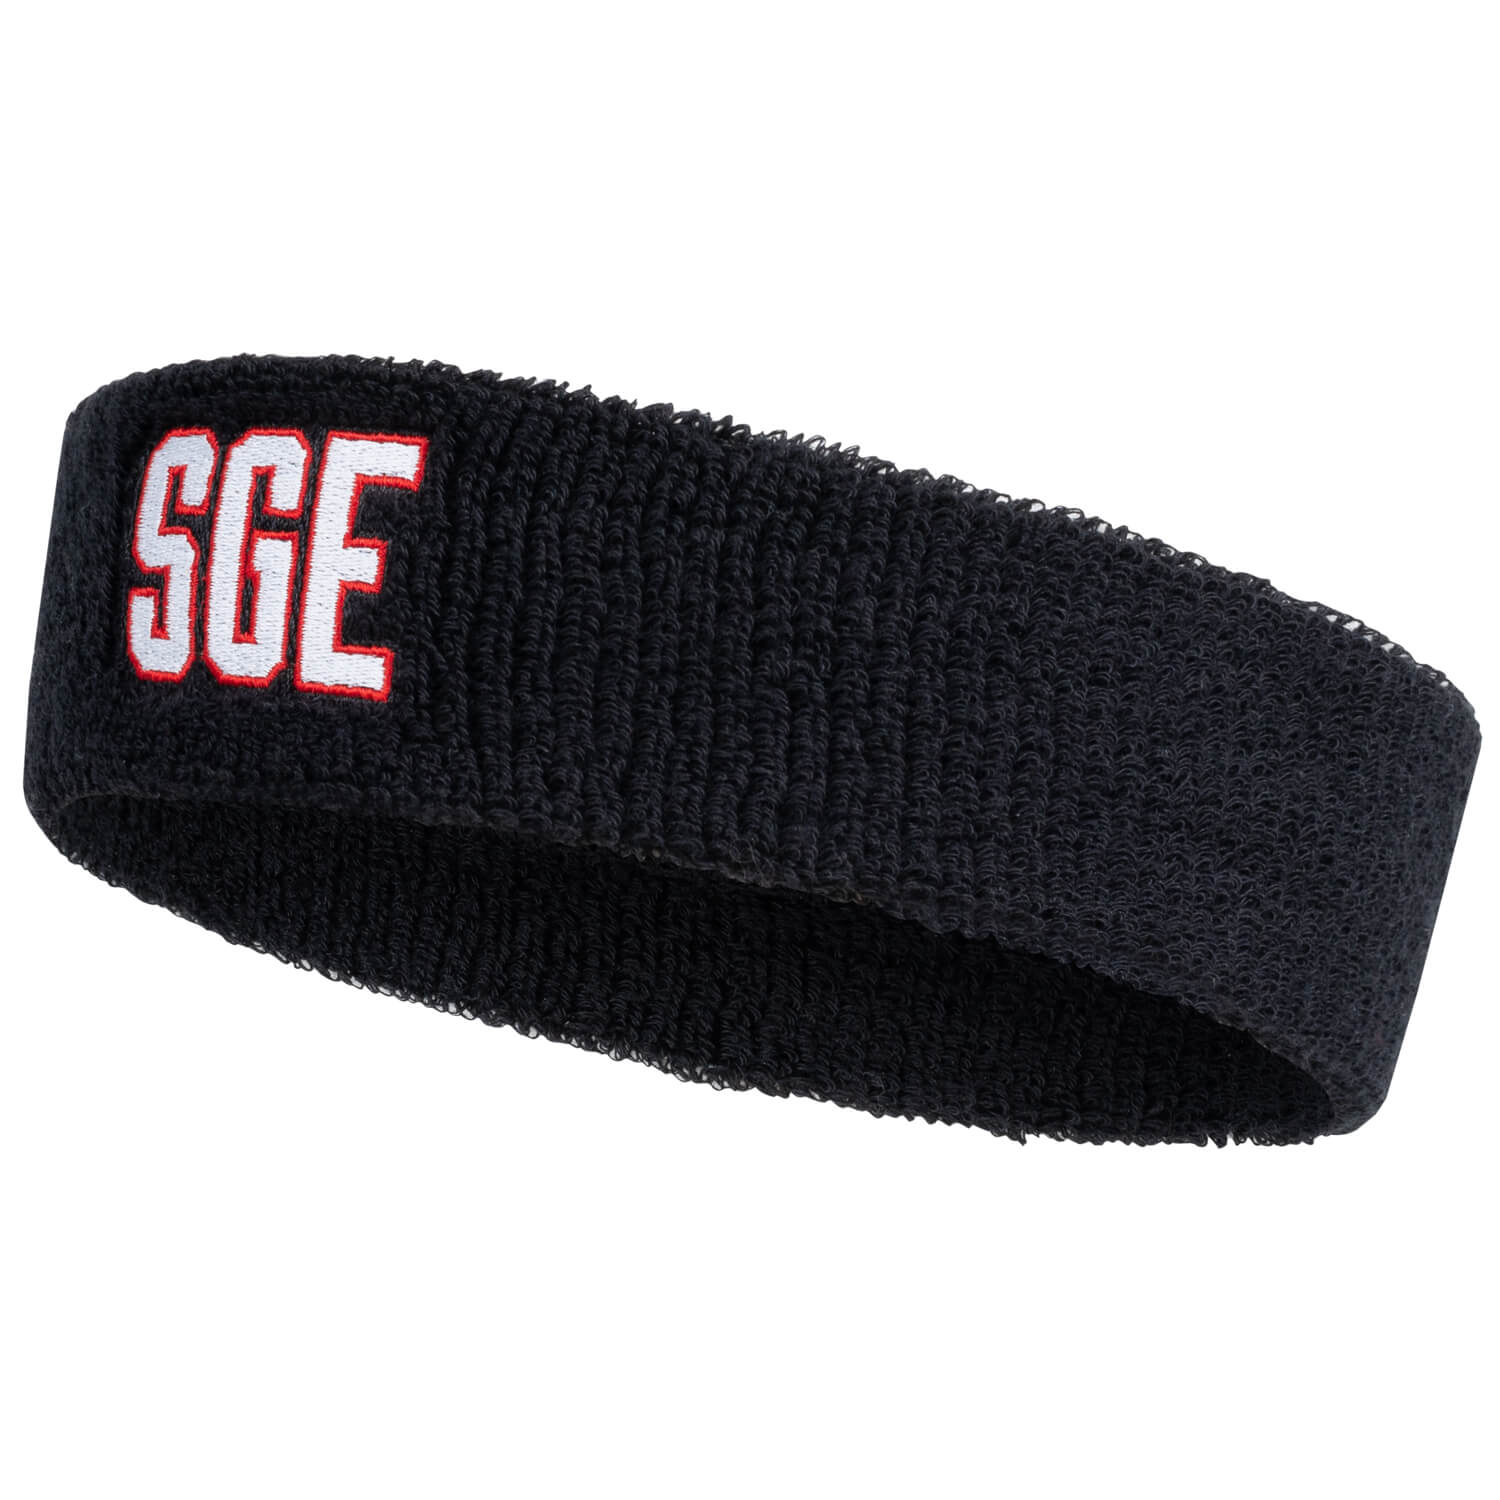 Bild 1: Headband SGE 99